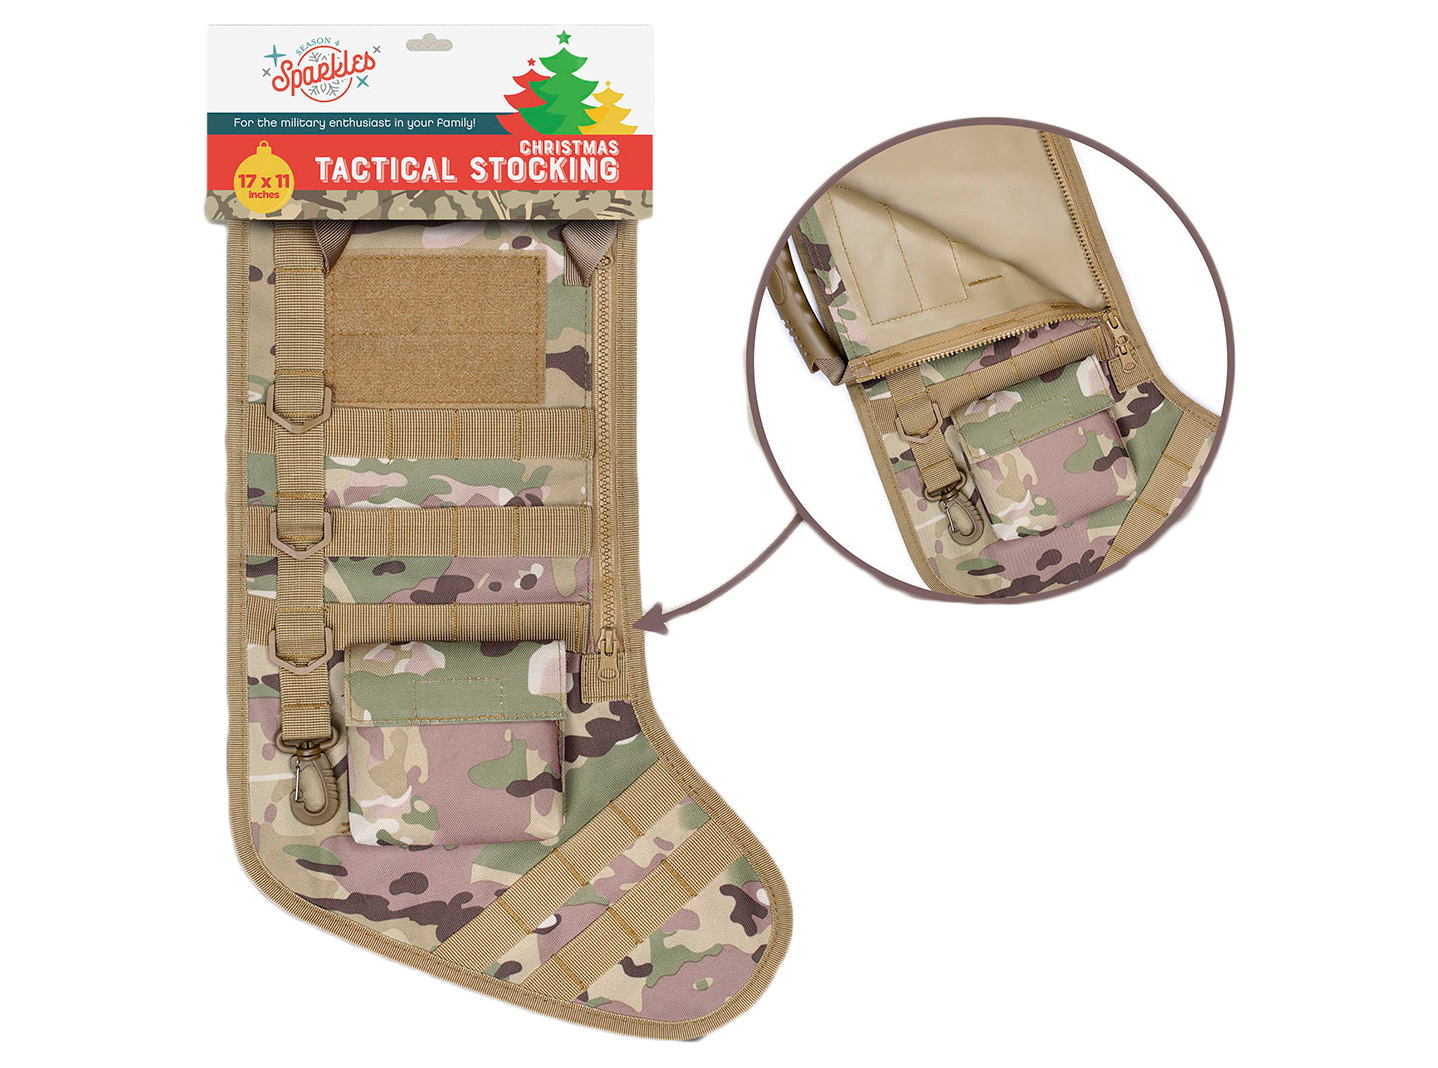 CHRISTMAS Tactical Stocking w/ Army Camo Print & Cargo Pockets